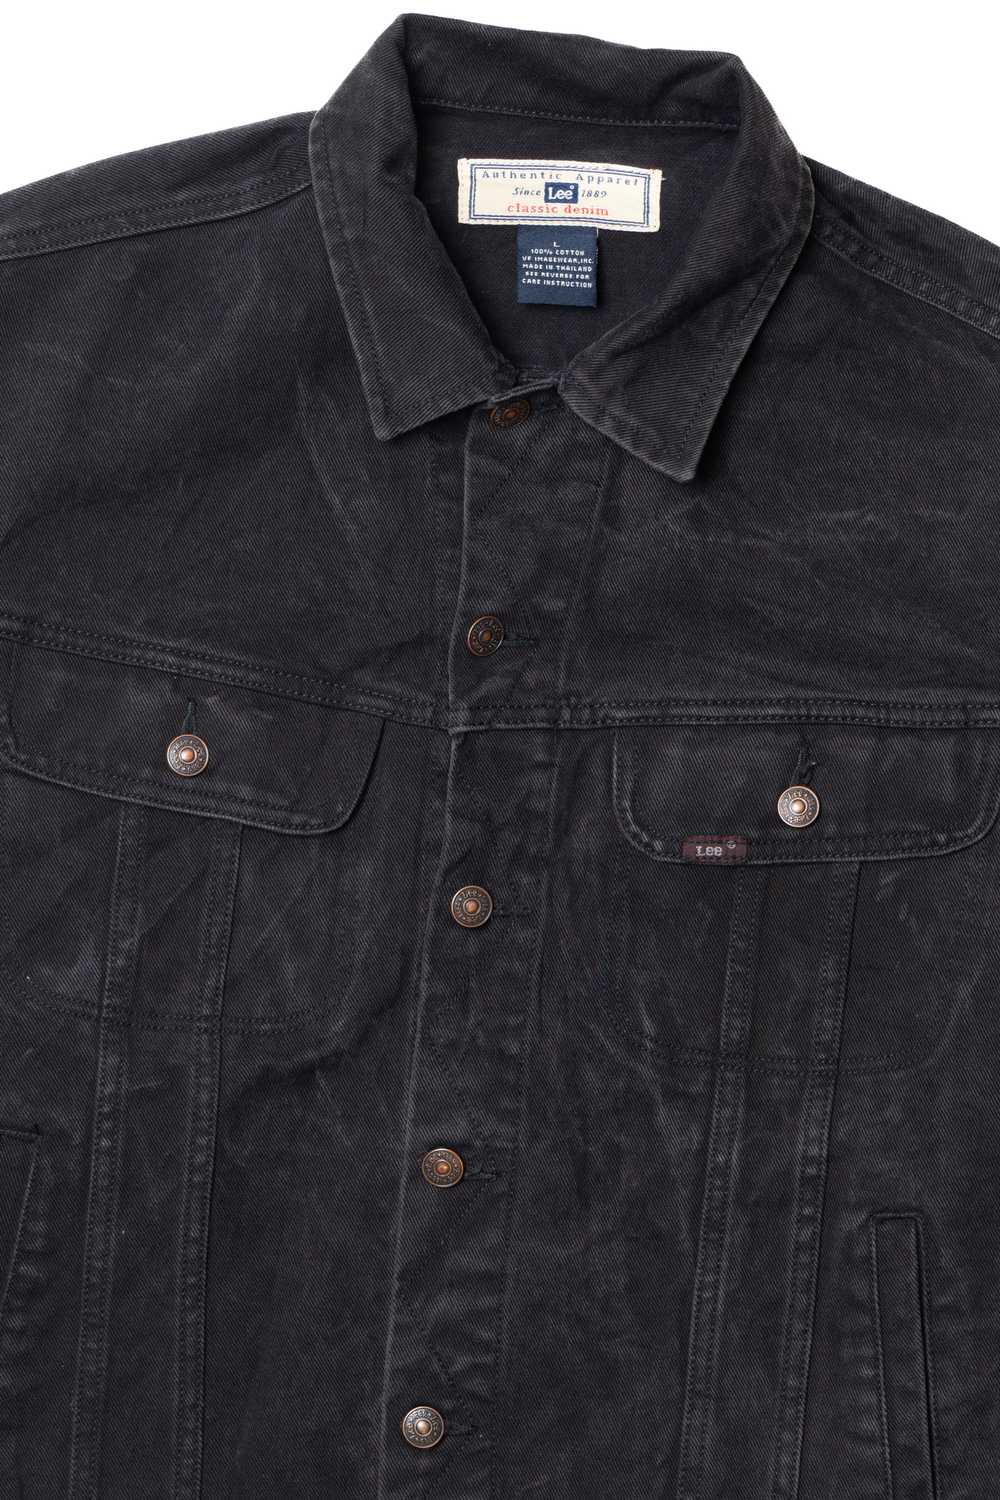 Vintage Lee Black Denim Jacket - image 3